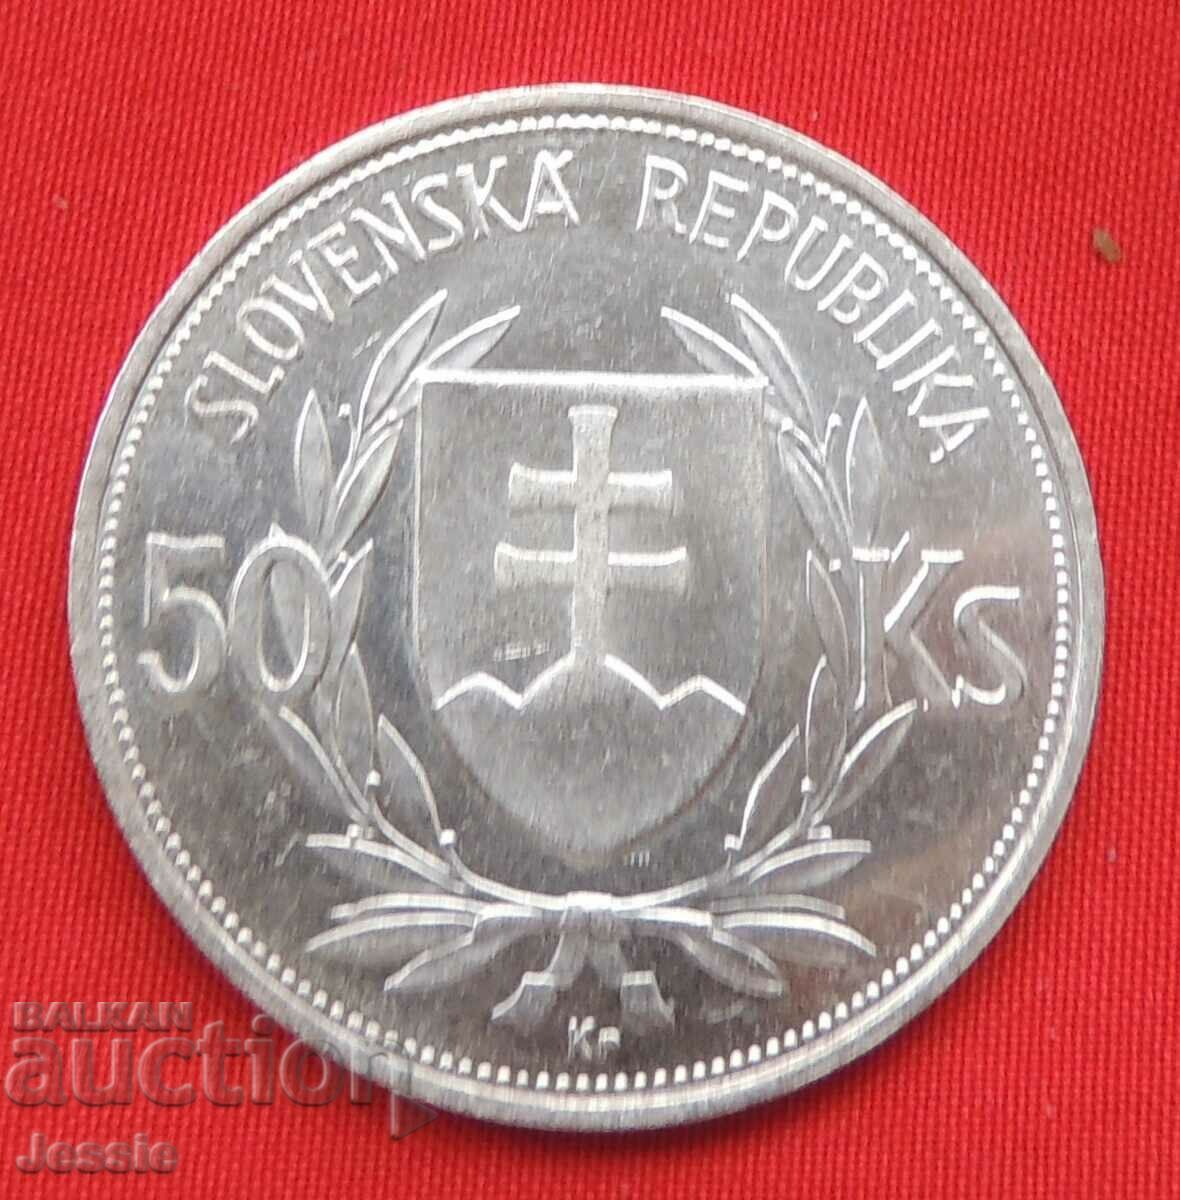 50 kroner 1944 Slovakia